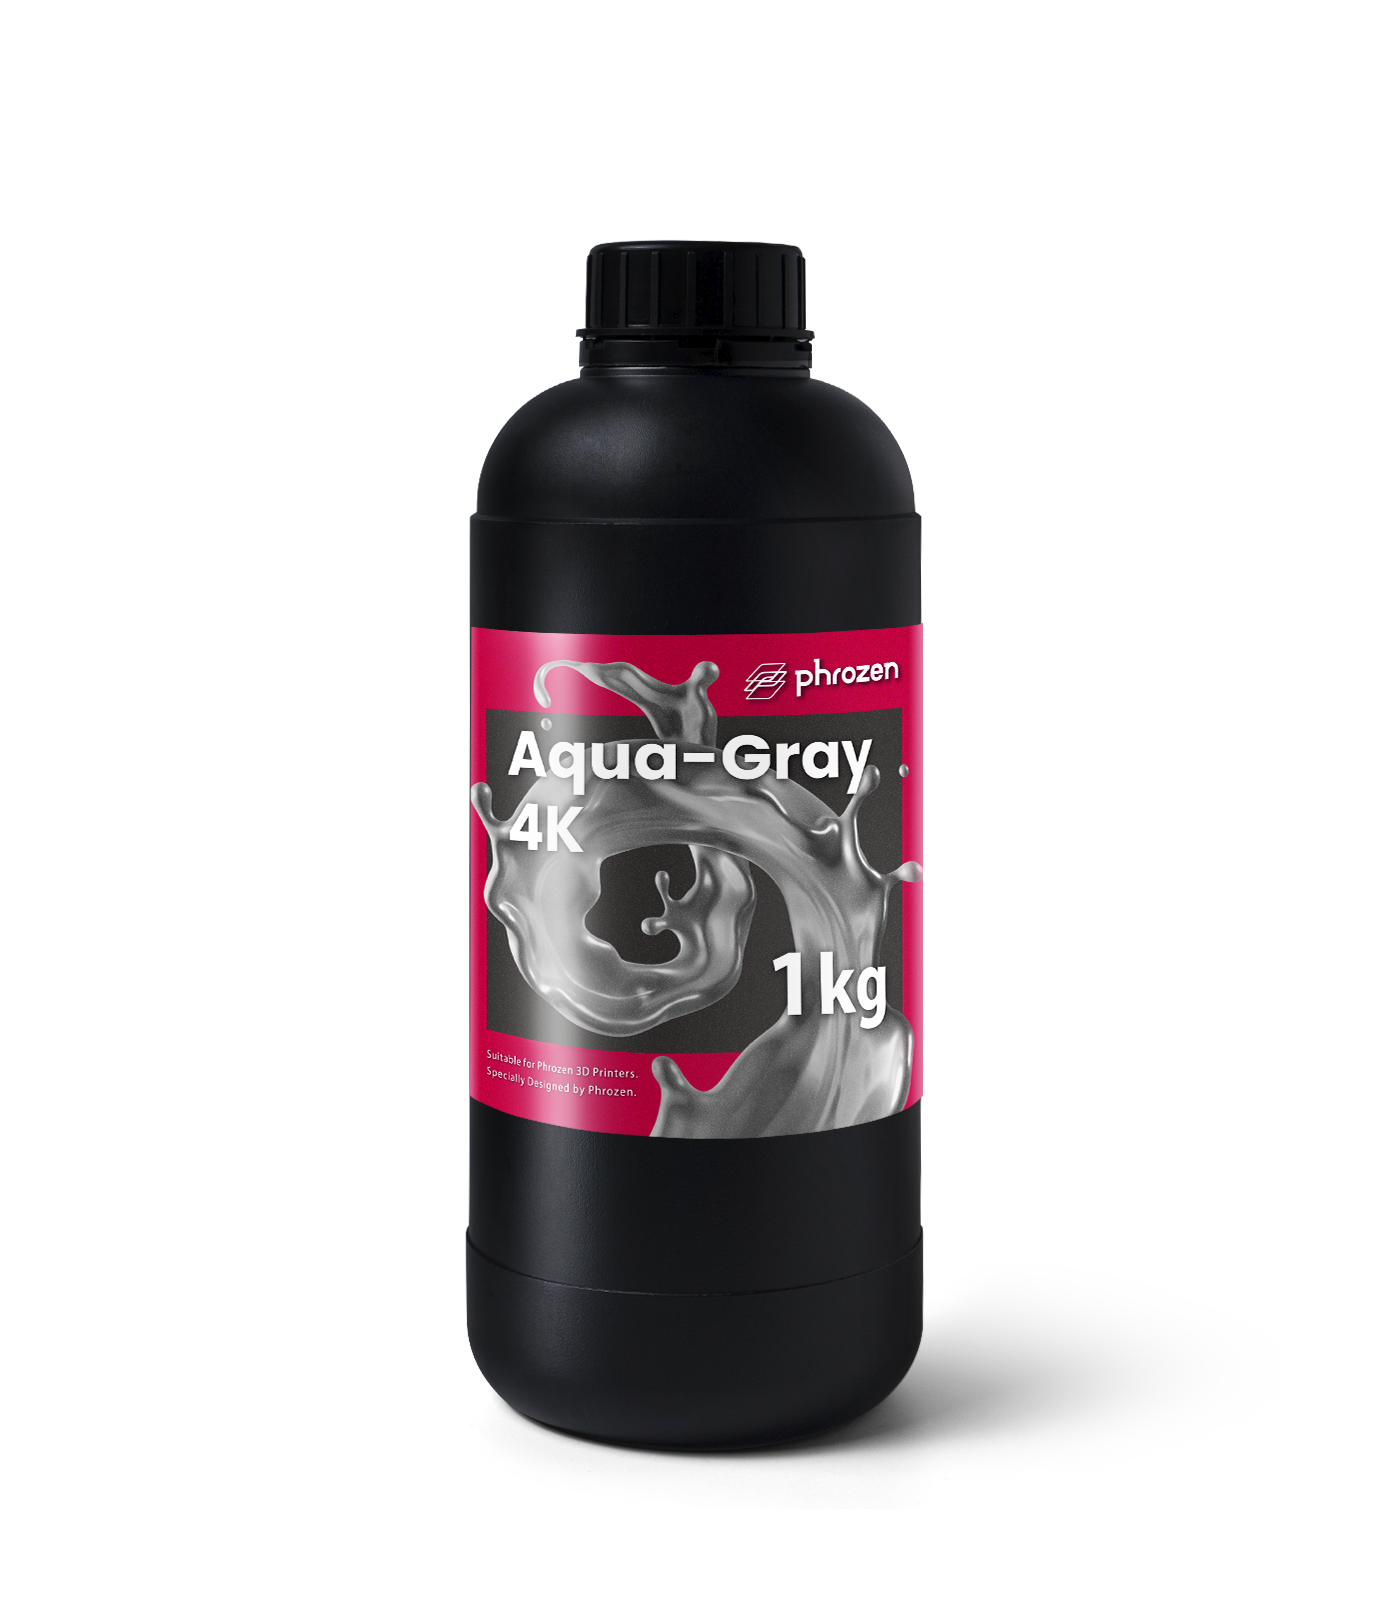 Phrozen aqua gray 4K